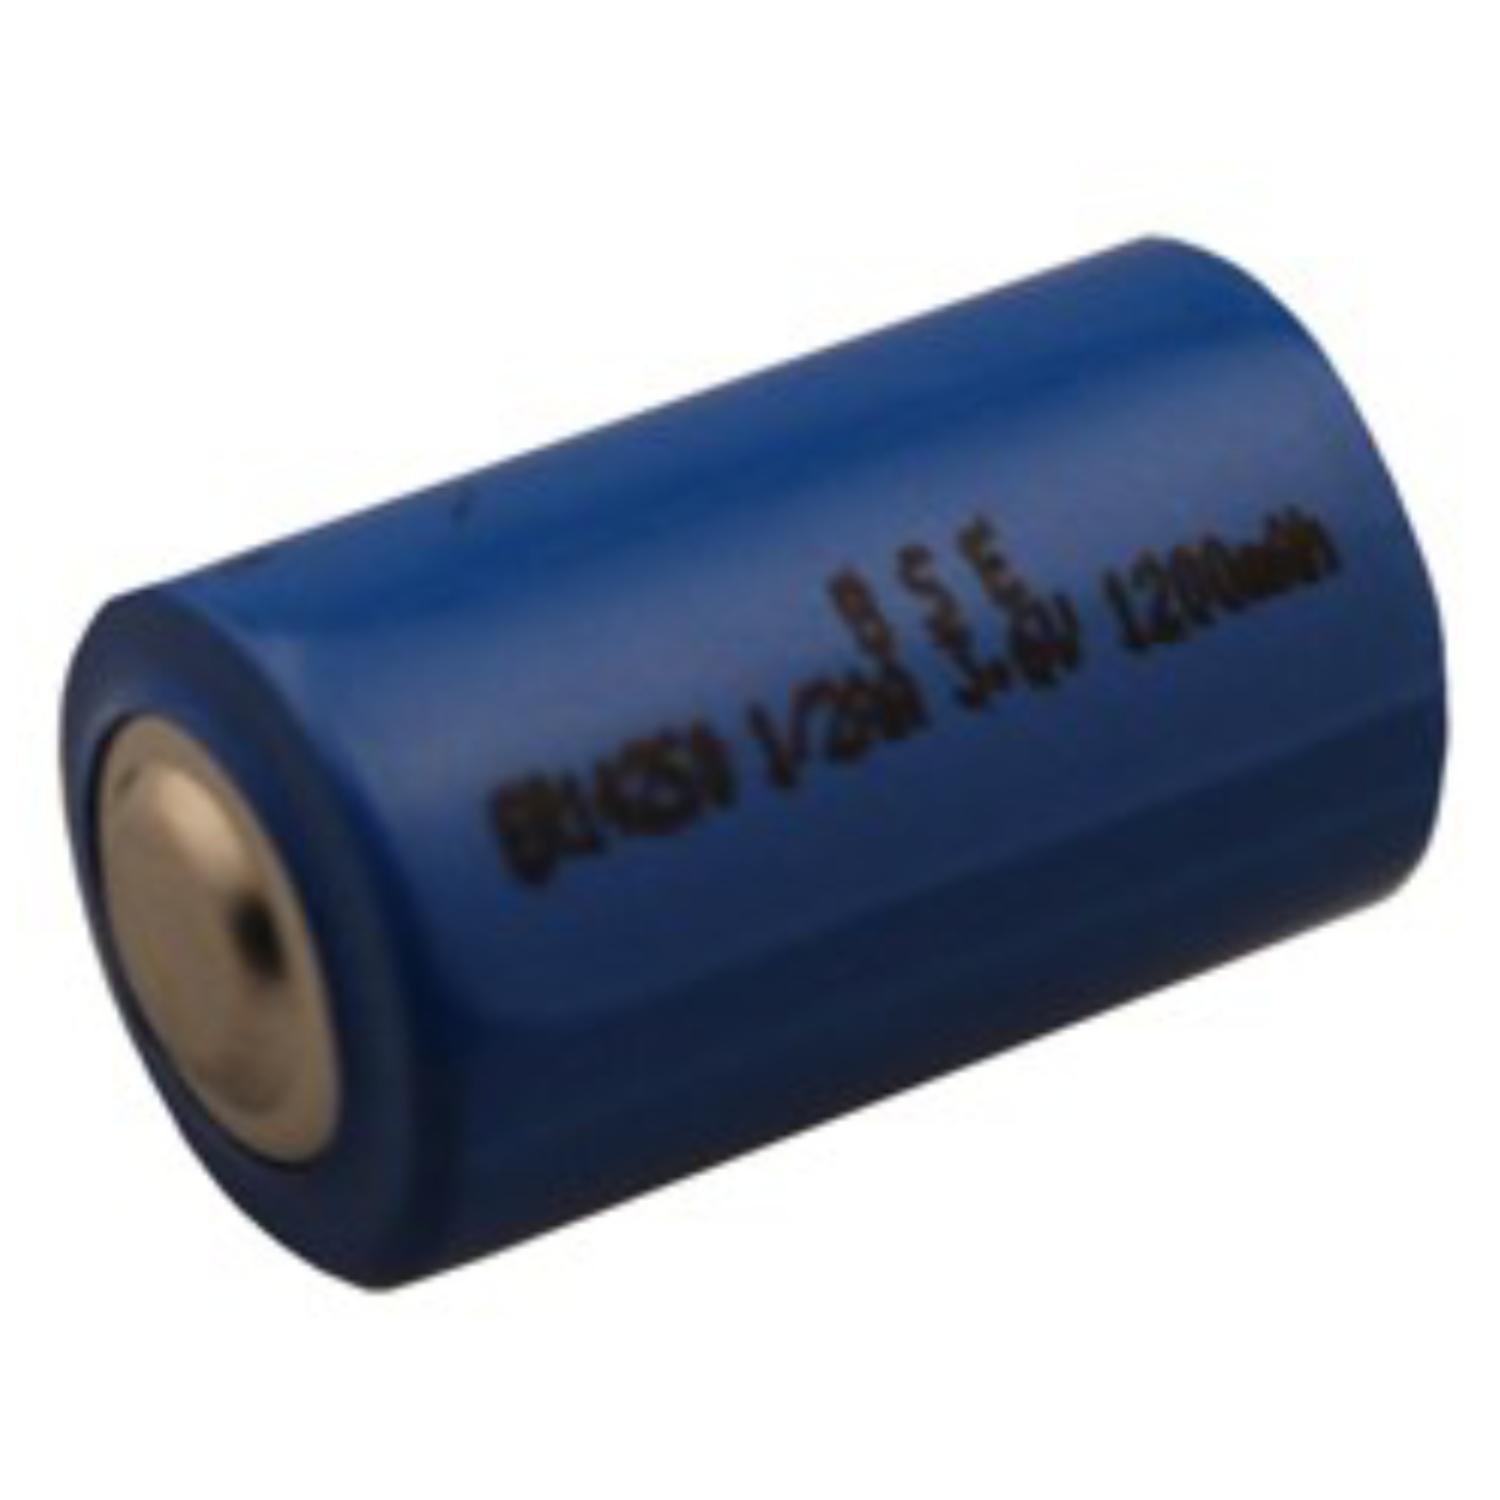 Batterie Alcaline 23A, 12 V DC, 50 mAh, 2-Blister, A23